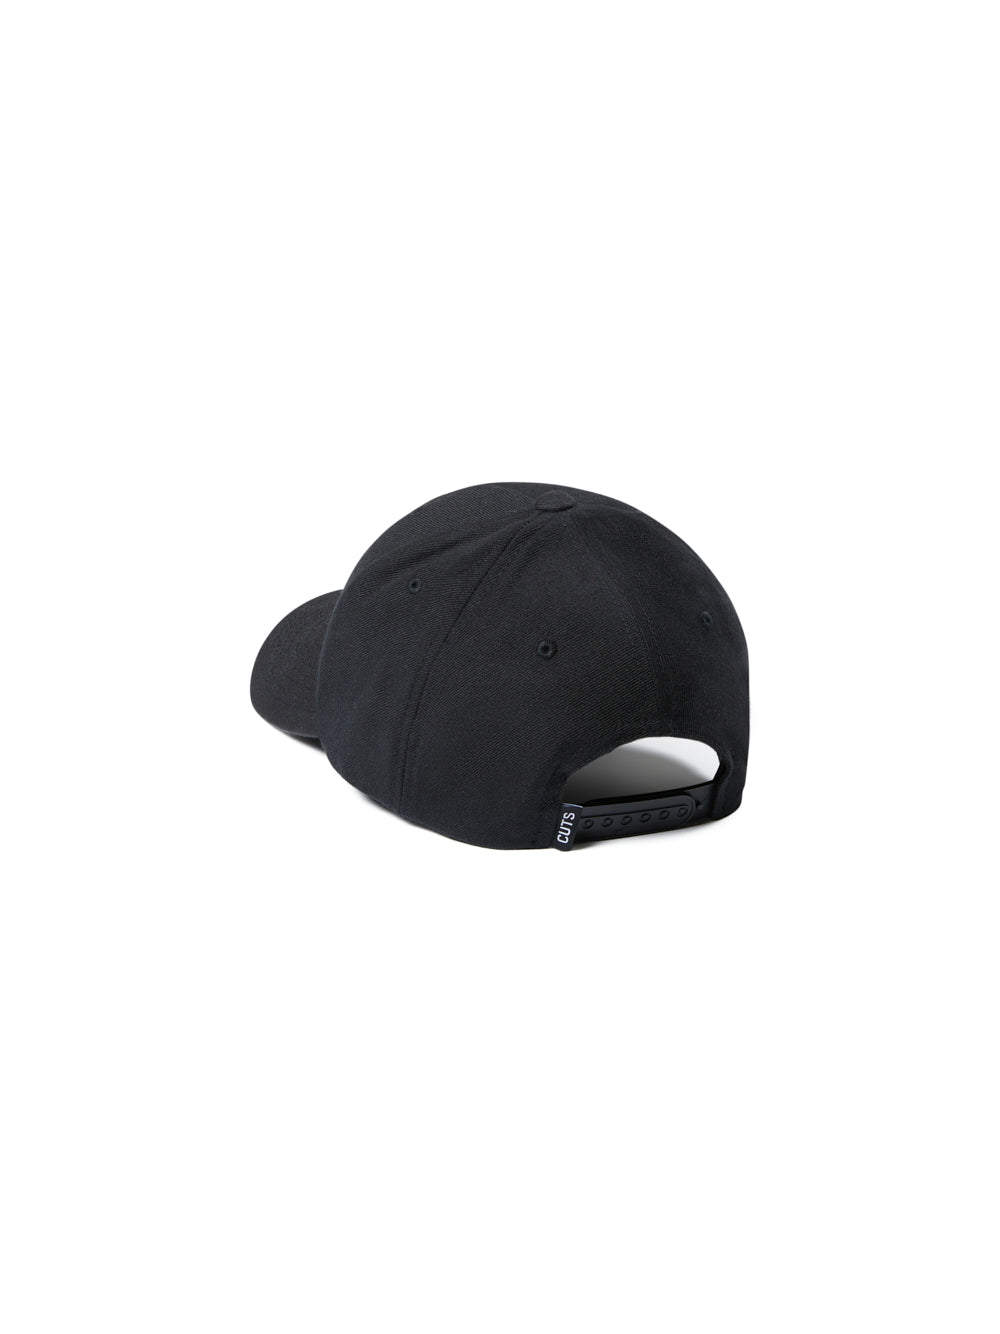 Varsity Ball Cap | Double Black Hat